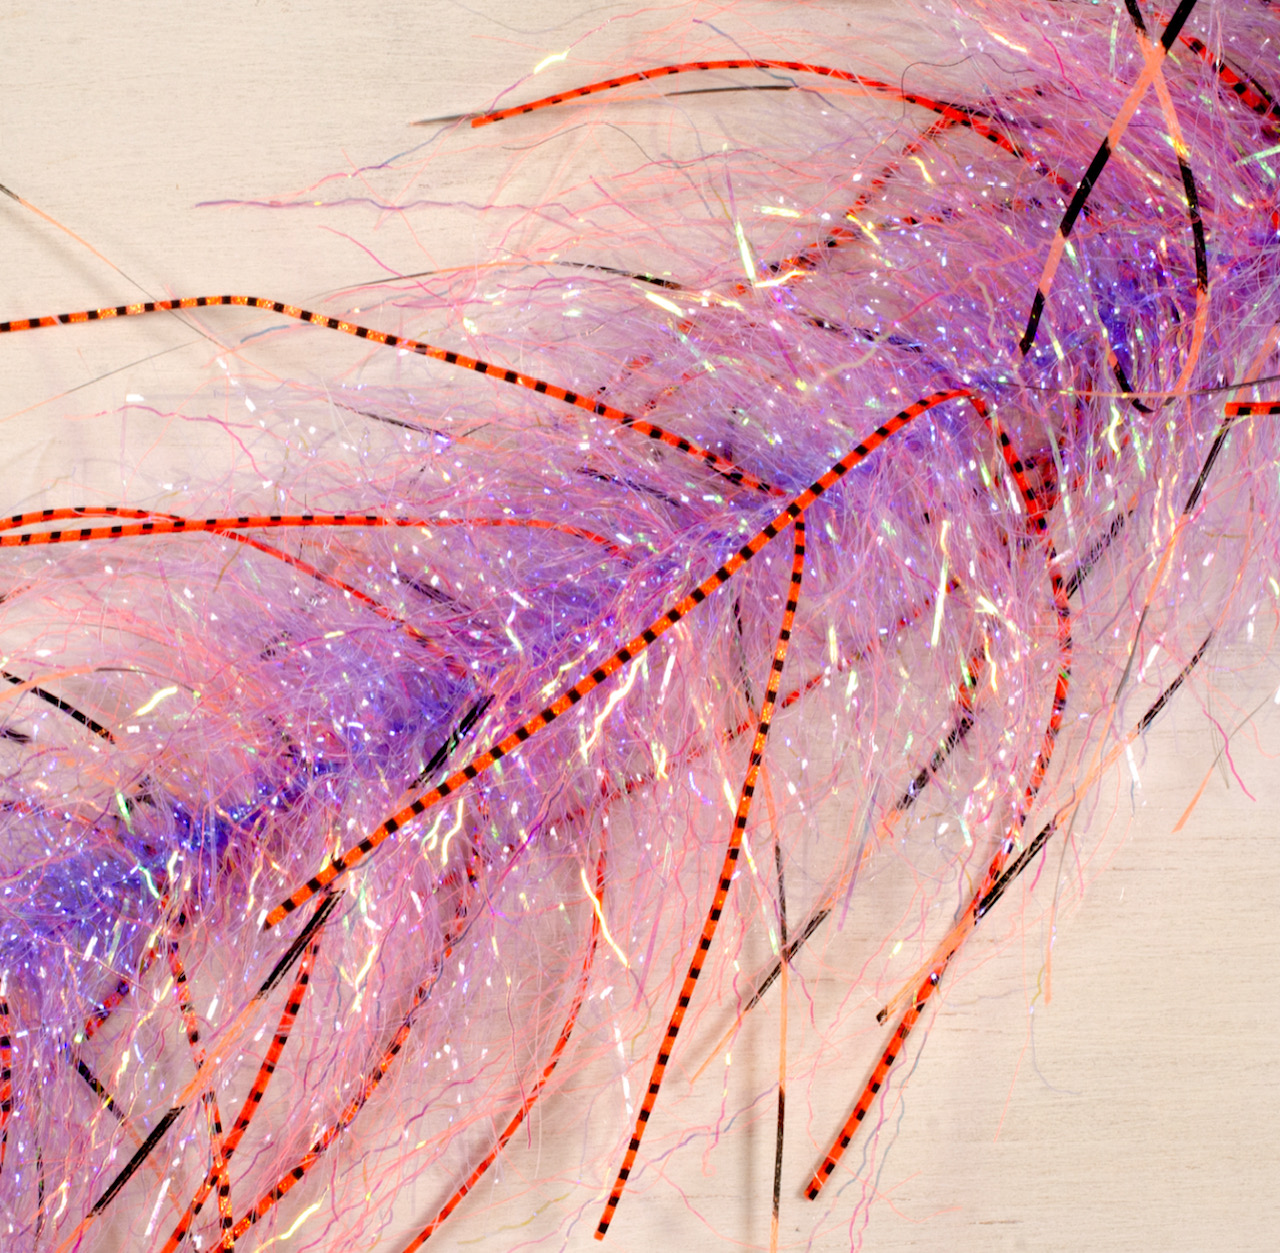 Fair Flies 5D Brushes - Steely Shrimp Pink/Lavender